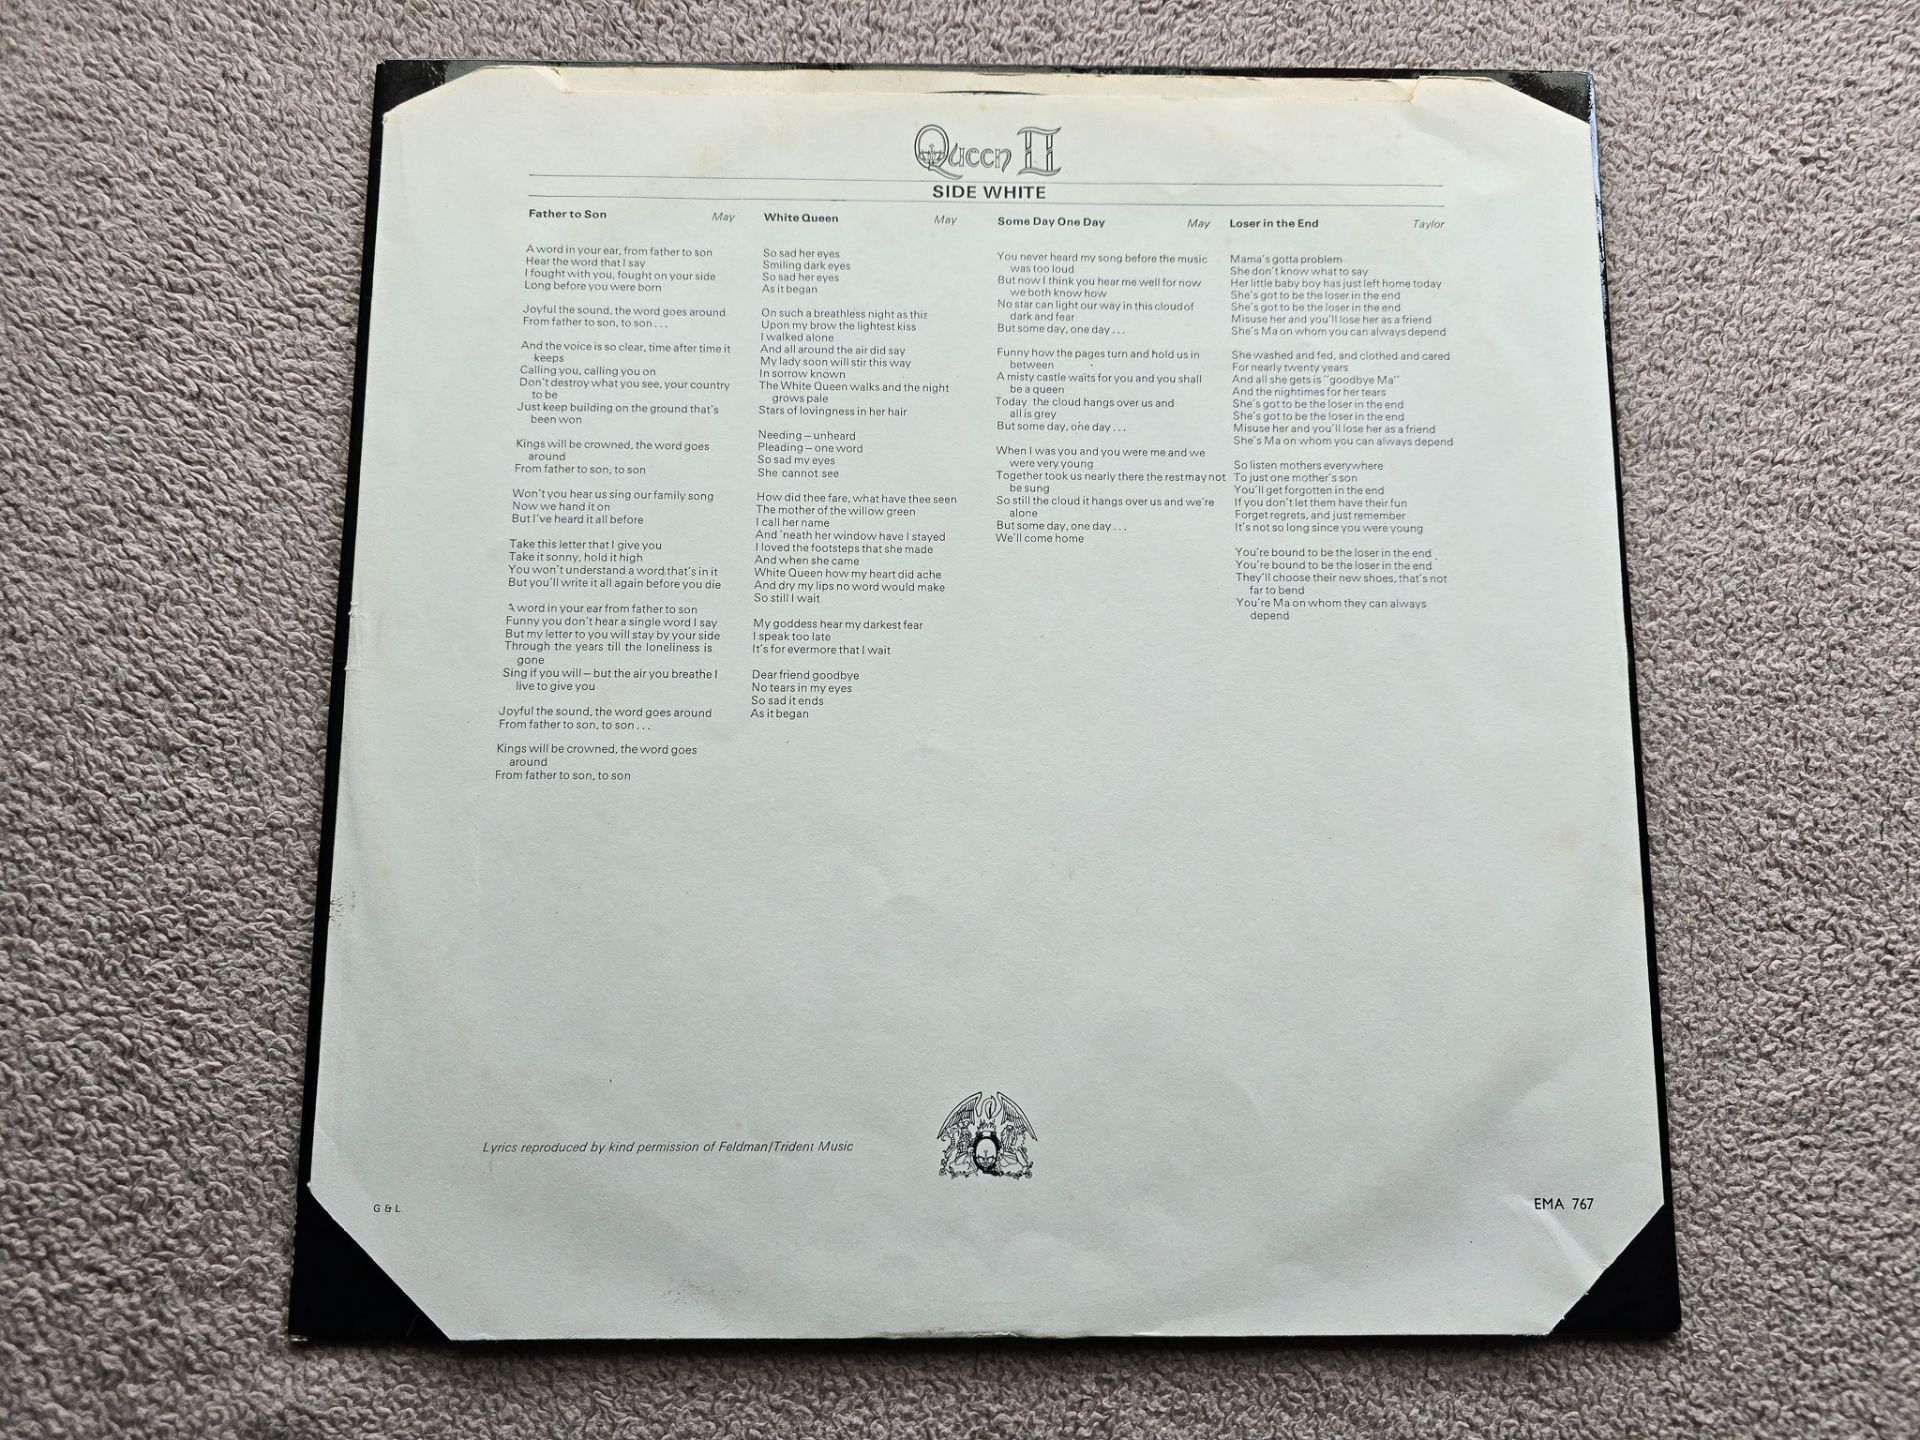 Queen II Original Near Mint UK Vinyl LP with laminated Gatefold sleeve & Inner - Image 6 of 9